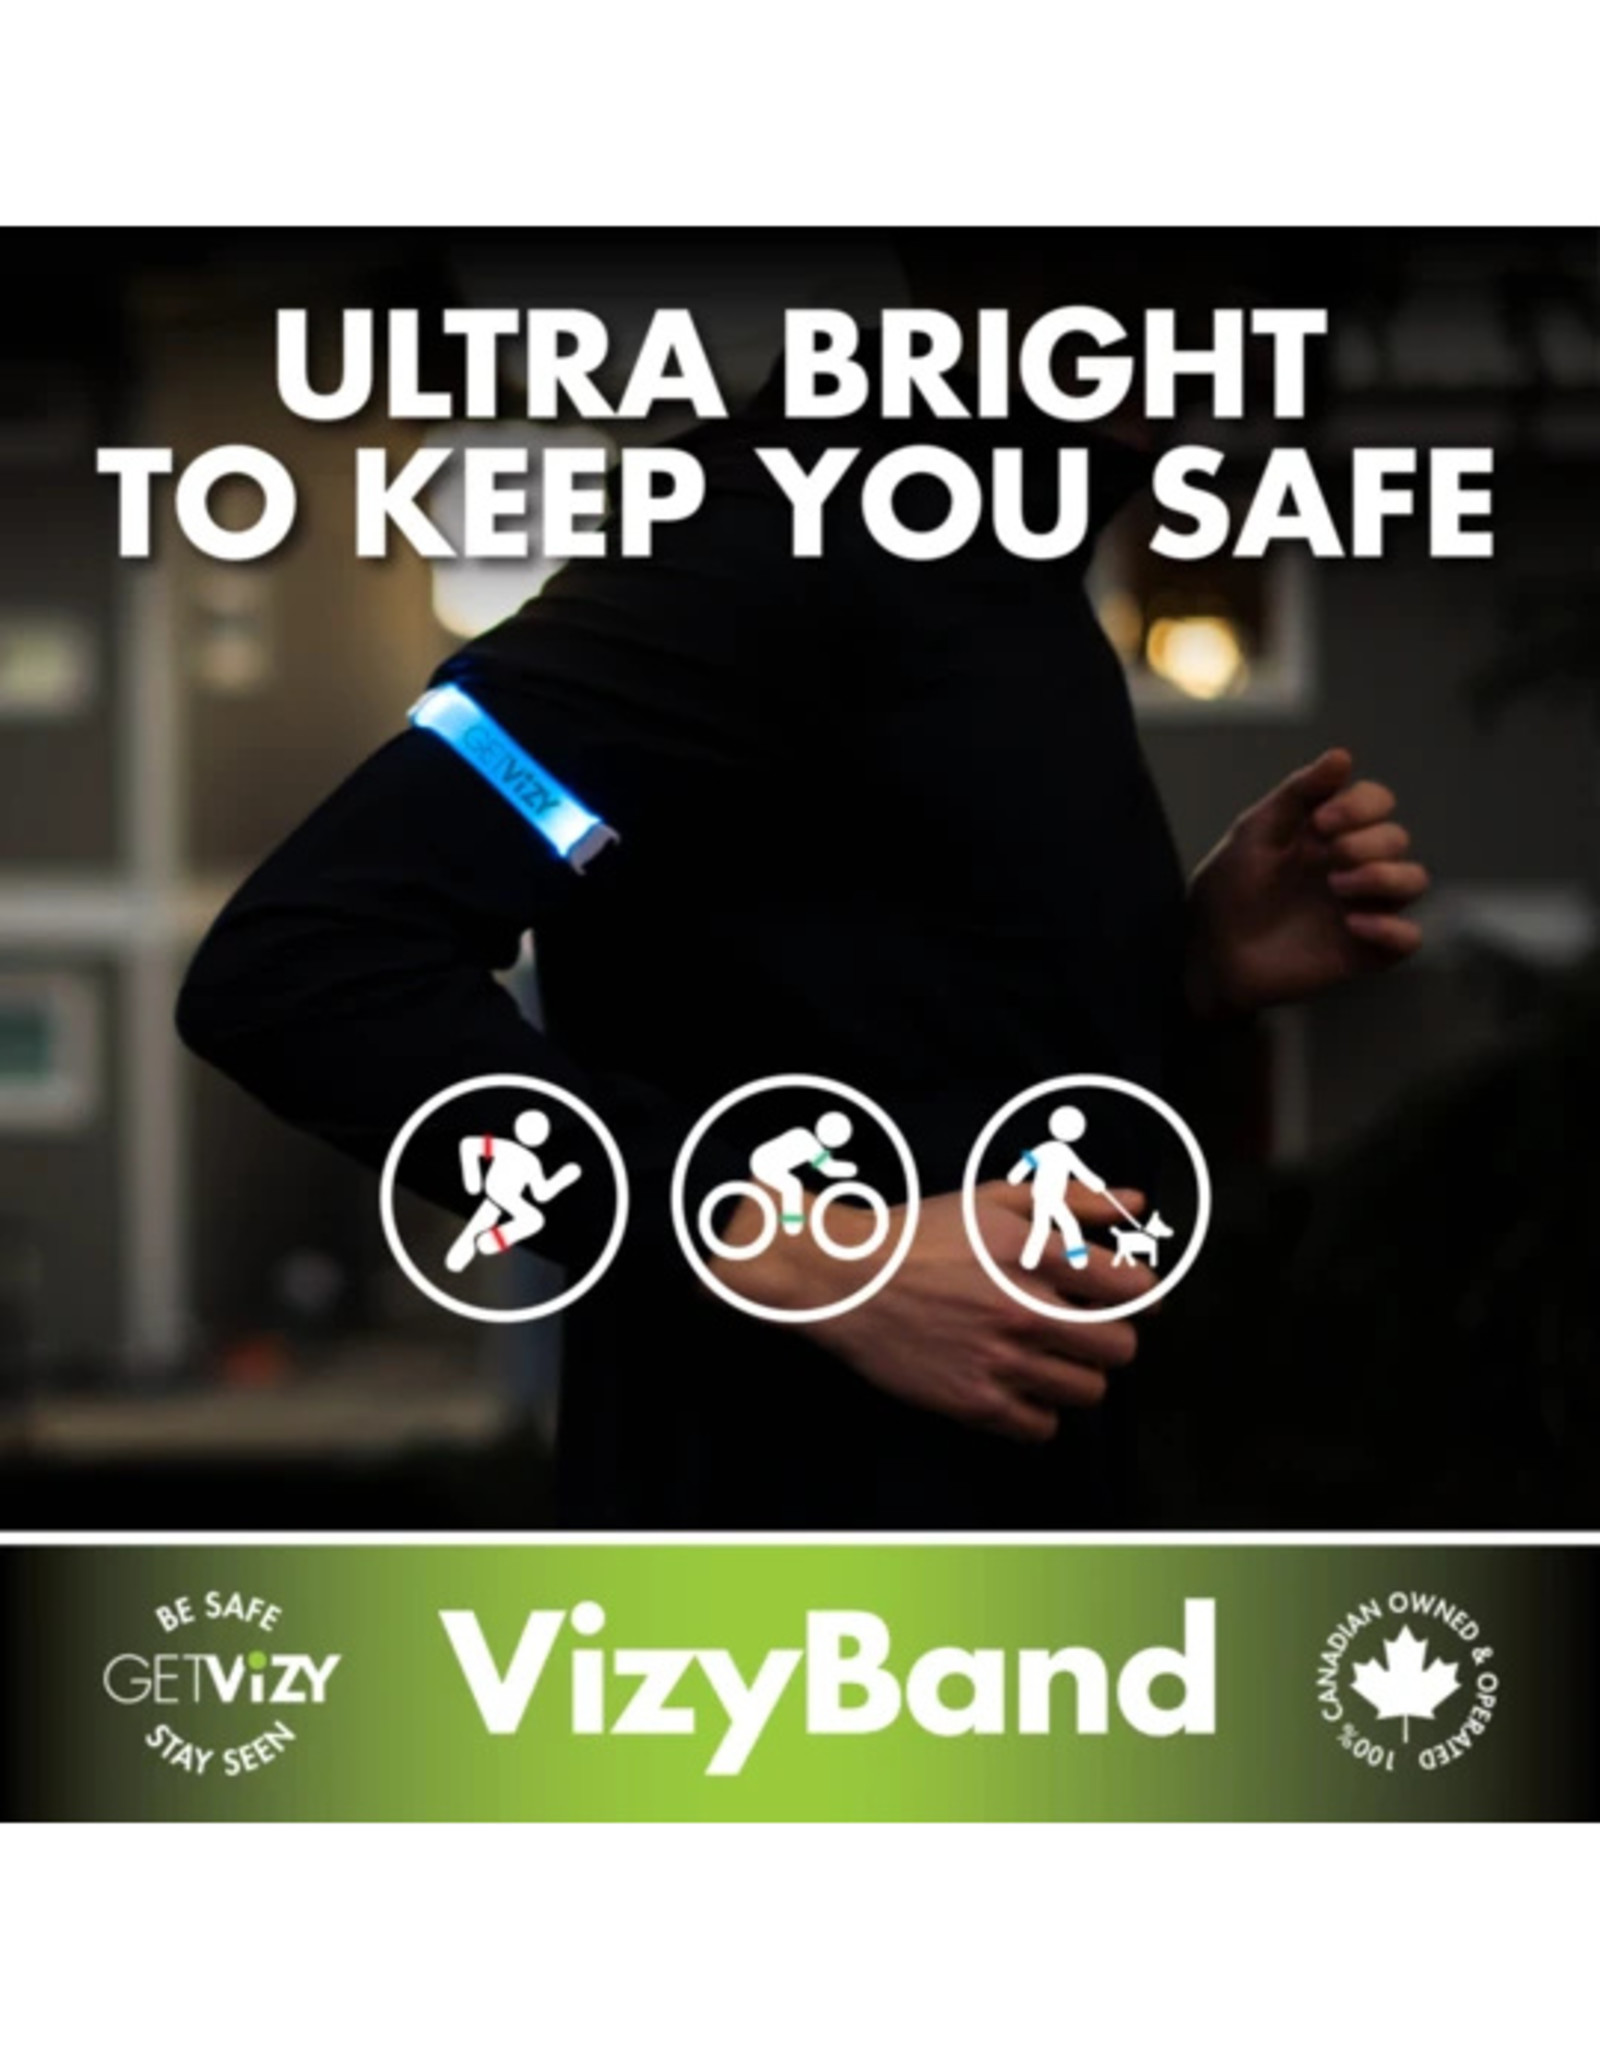 GetVizy GetVizy VizyBand: Rechargeable LED Armband Light: